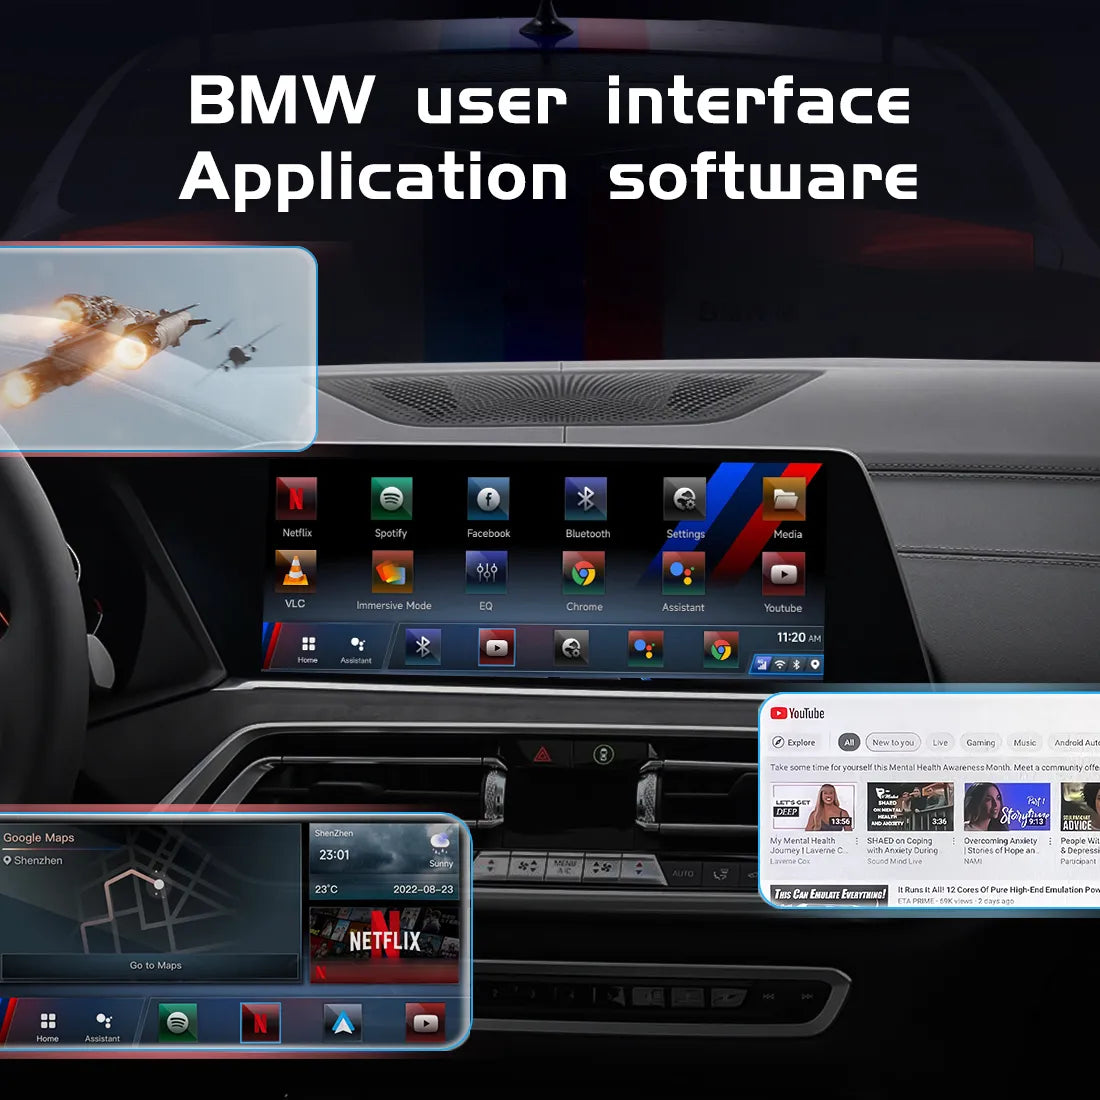 Carlinklife BMW AI Box Wireless CarPlay Adapter BMW Streaming Multimedia Magic Box